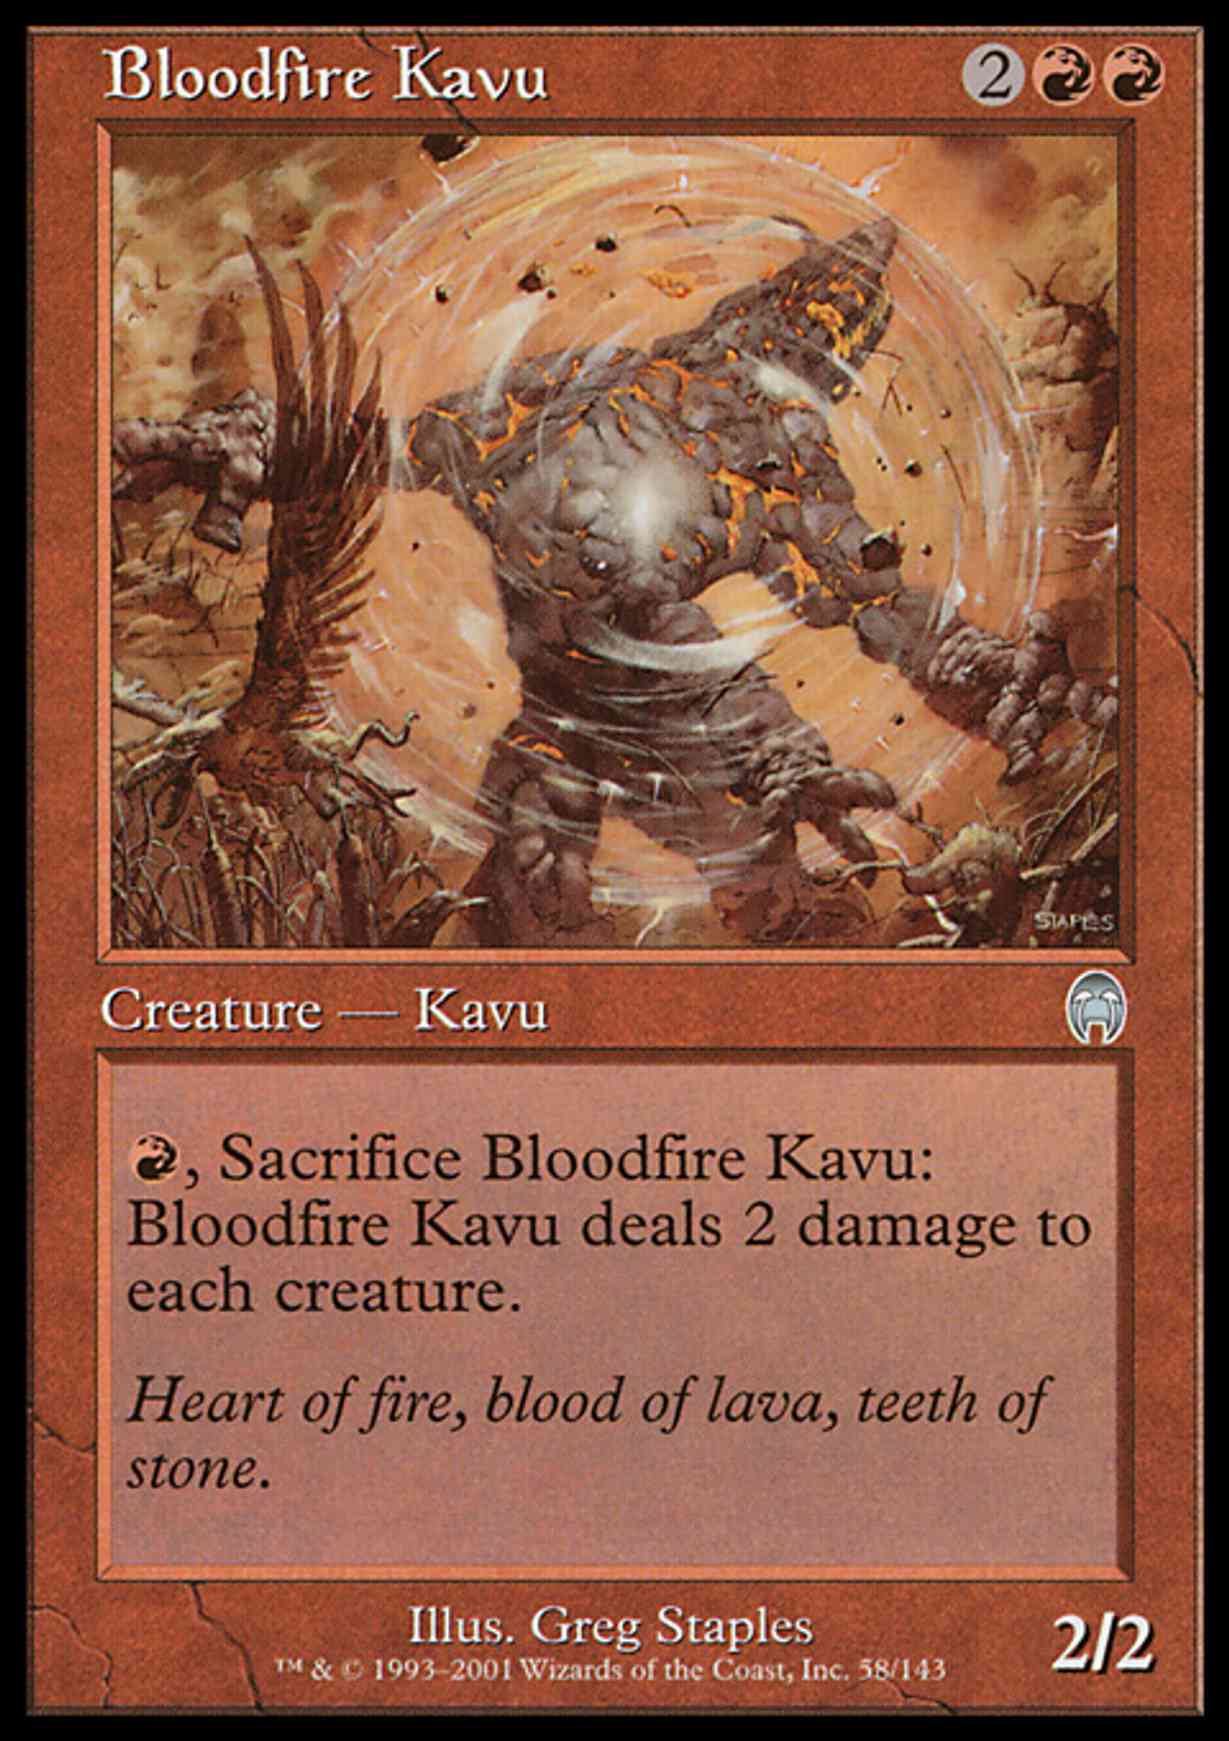 Bloodfire Kavu magic card front